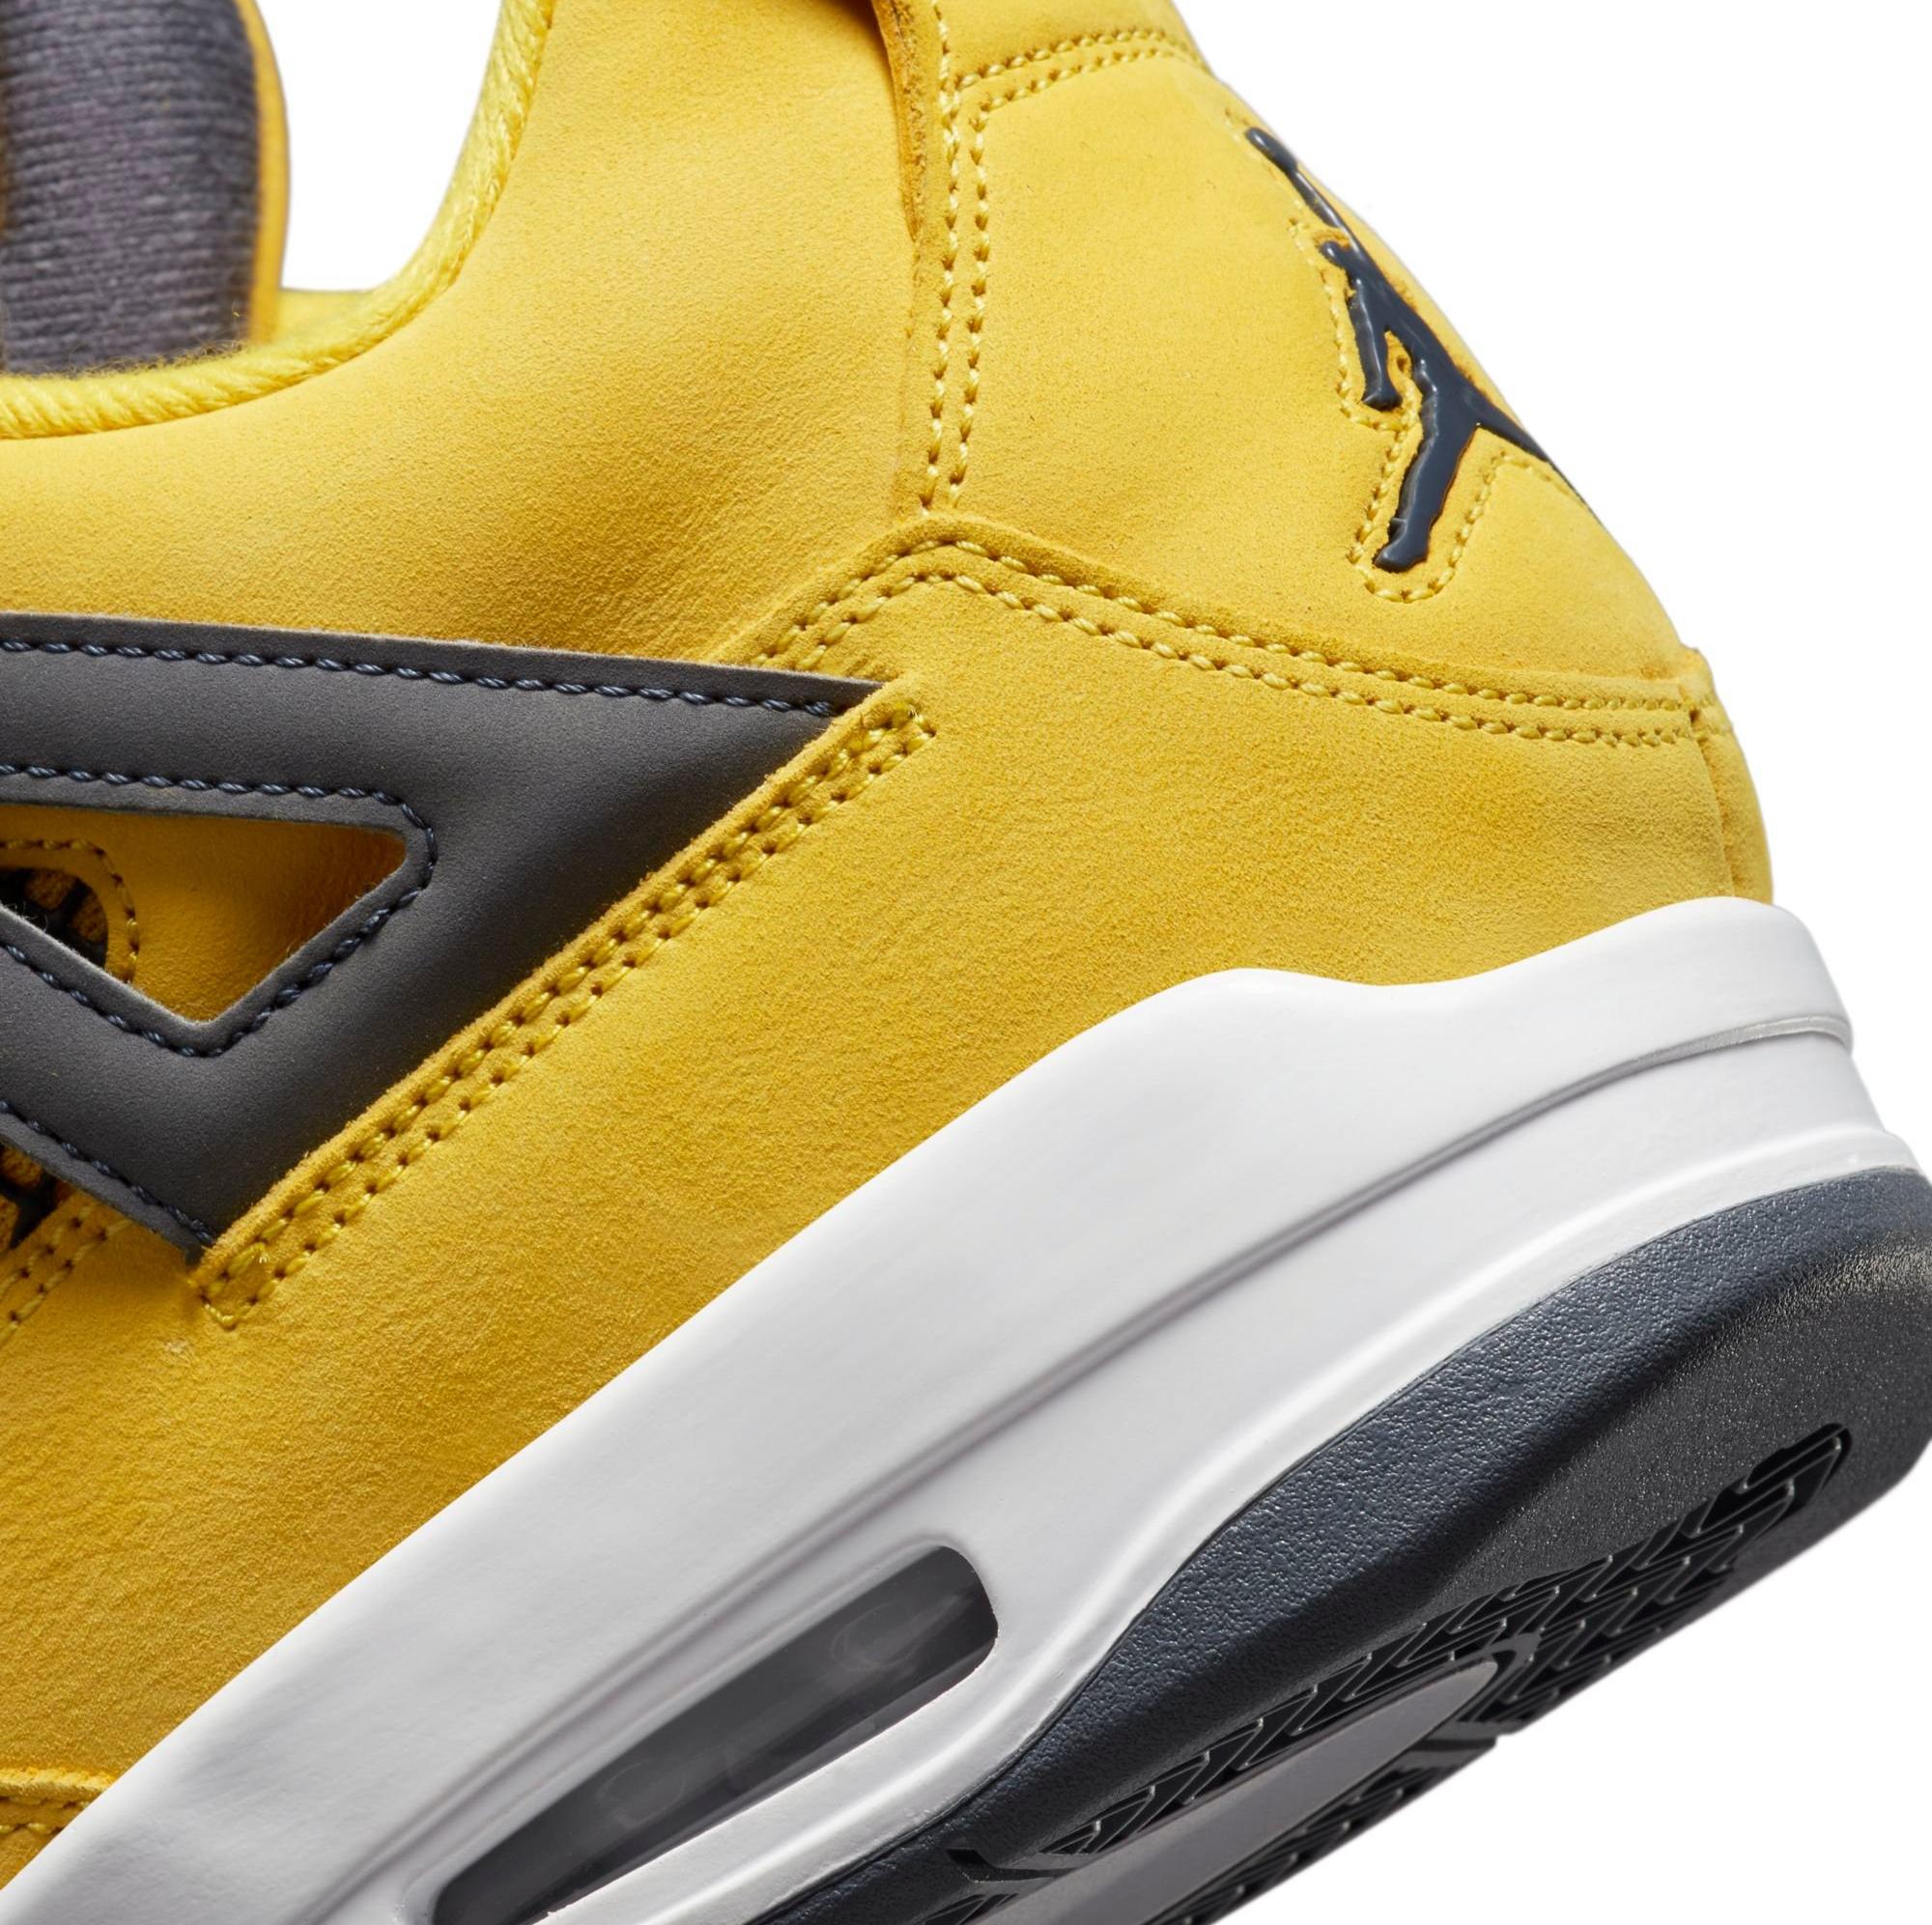 Sneakers Release – Jordan 4 Retro “Lightning” Tour Yellow/Dark 